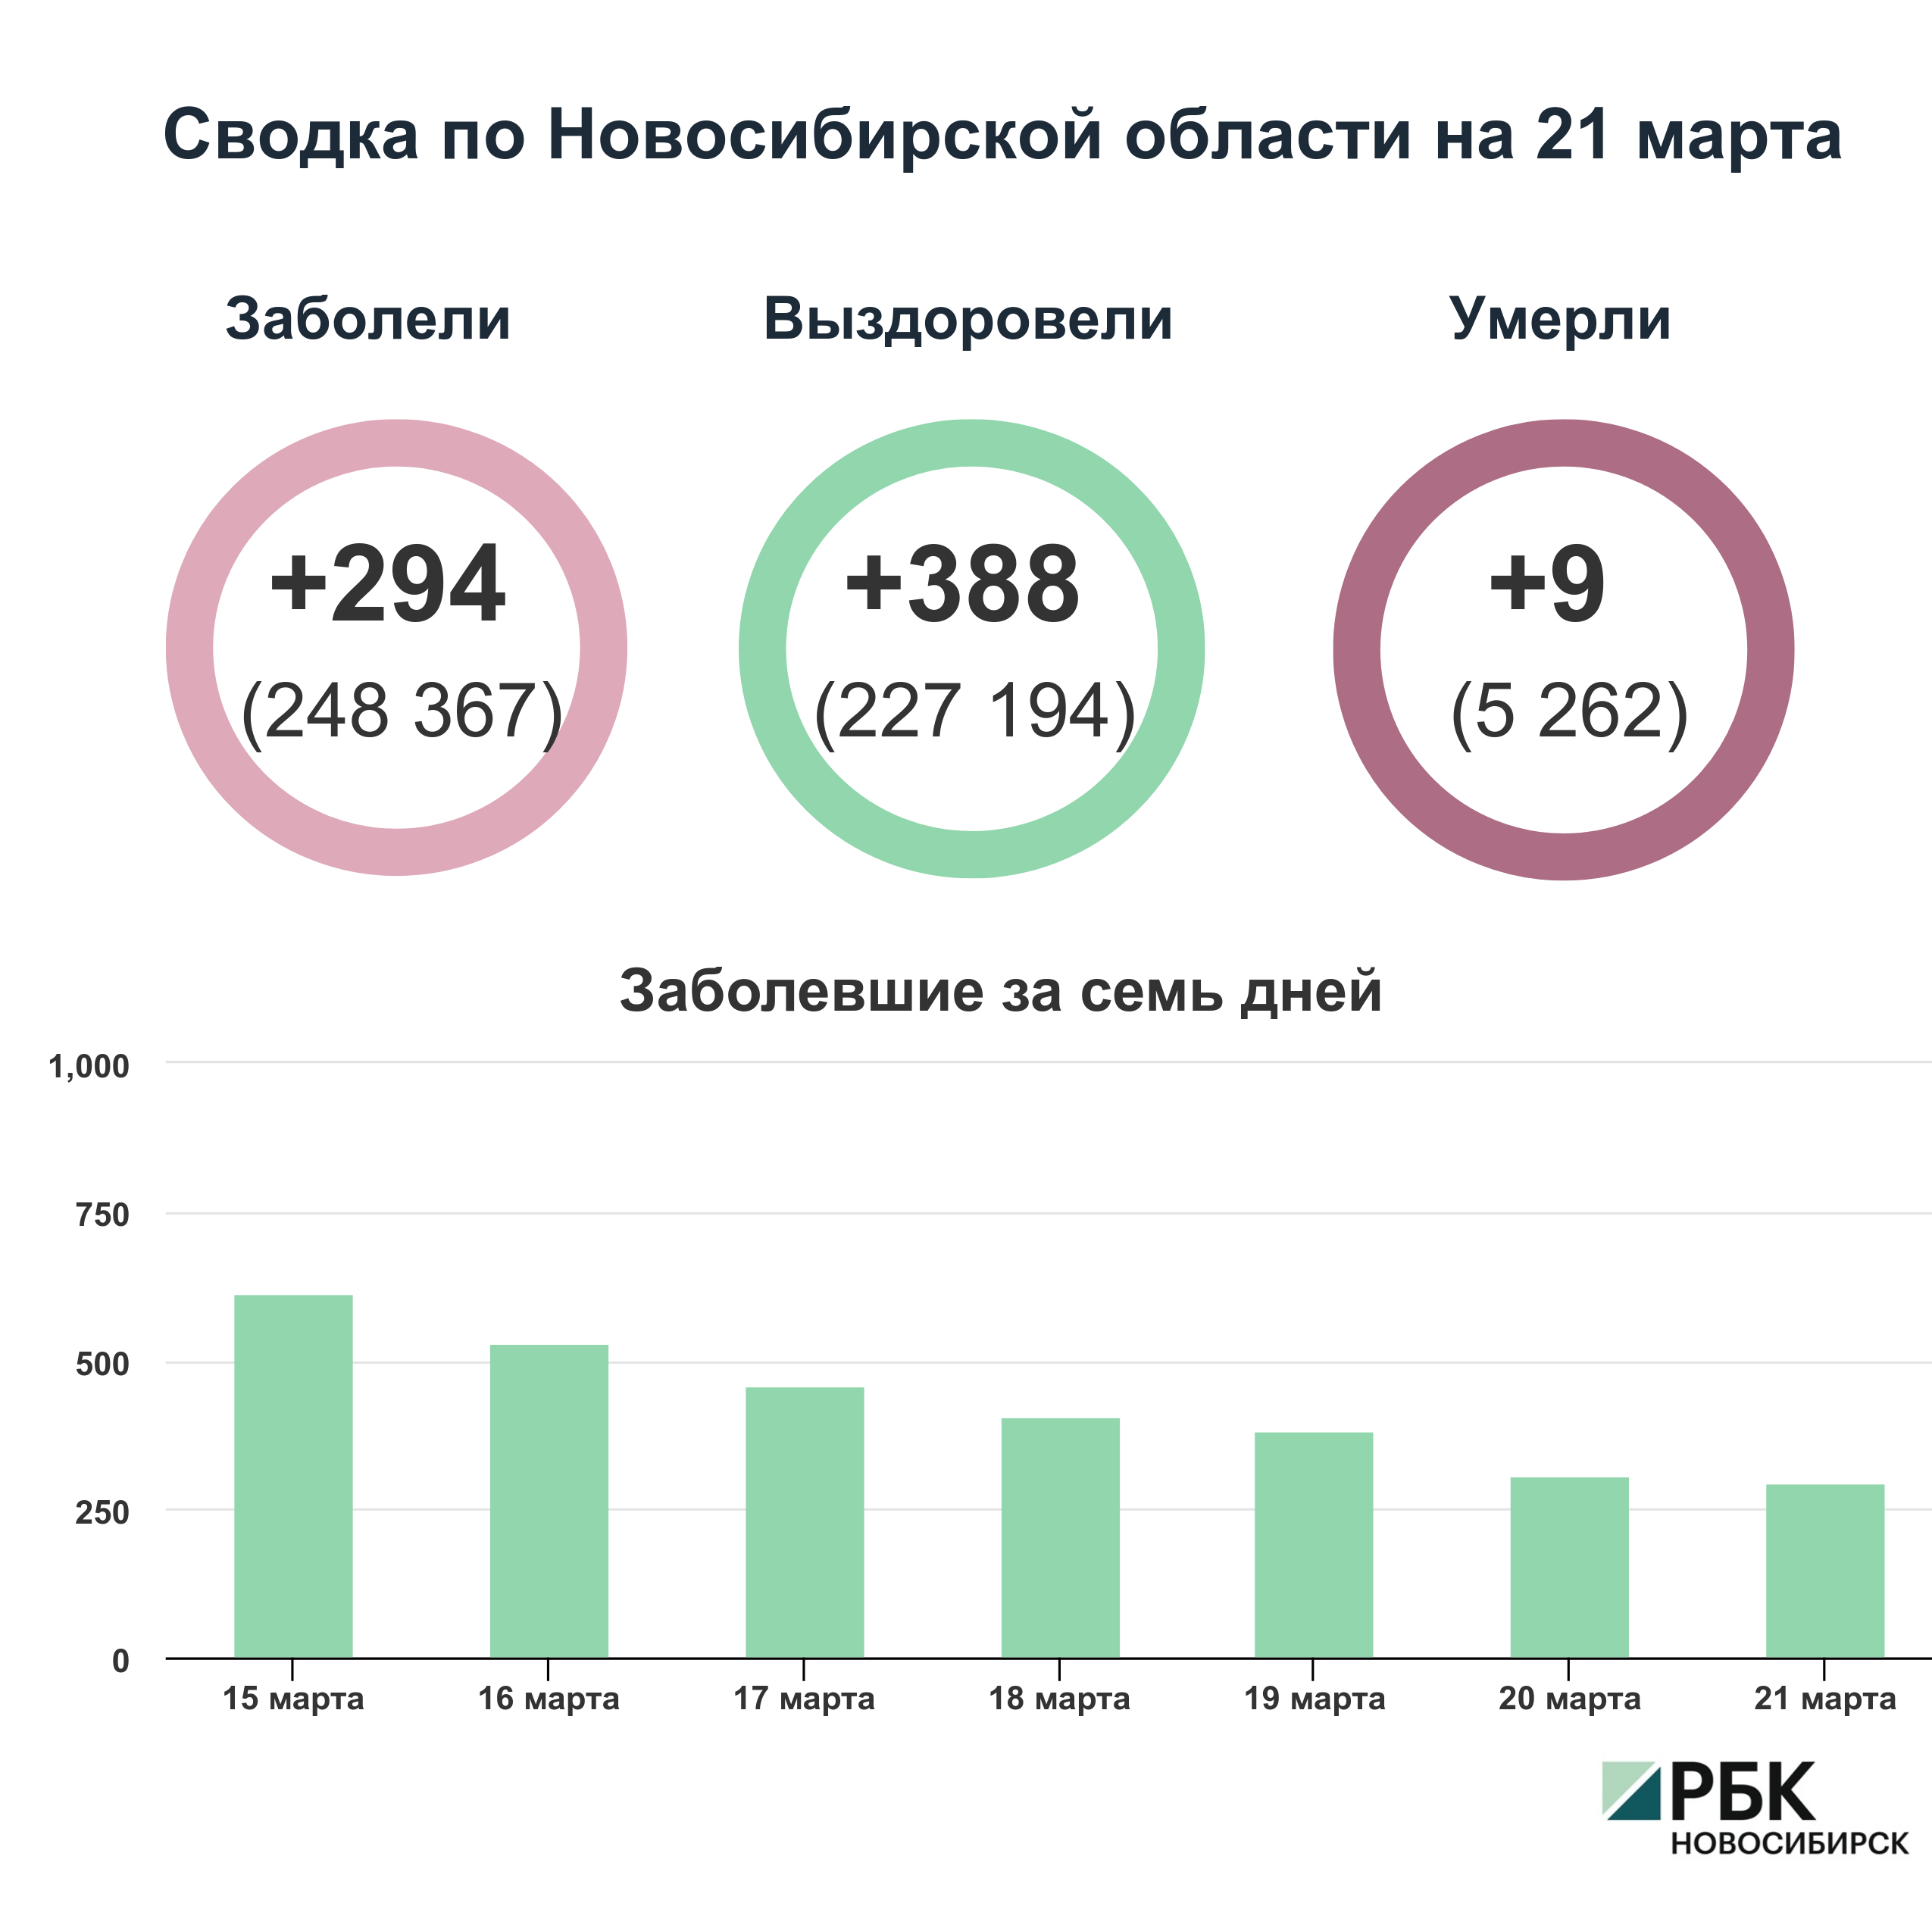 Коронавирус в Новосибирске: сводка на 21 марта